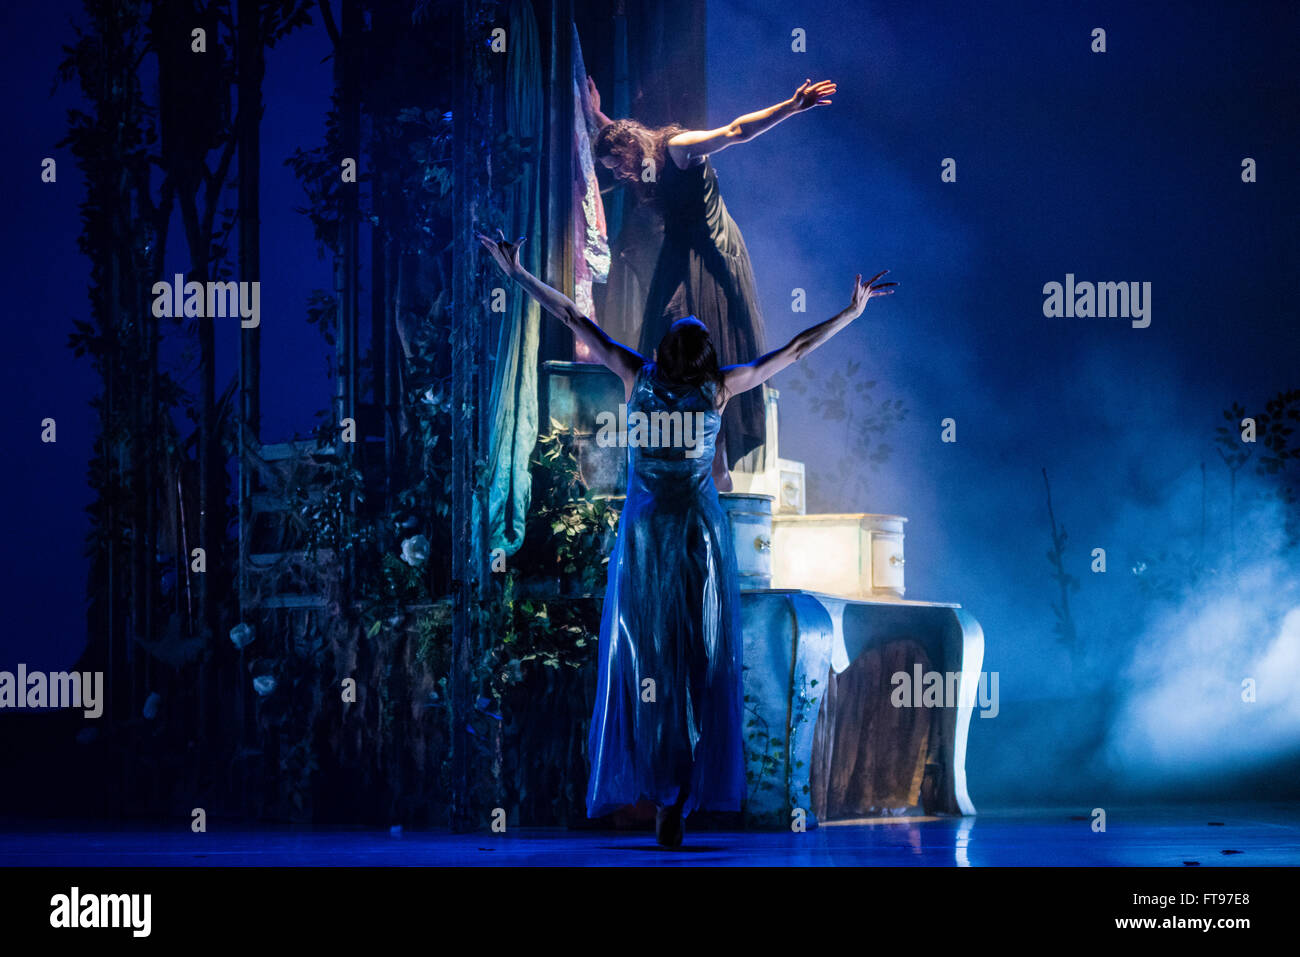 London, UK. 25th March, 2016. balletLORENT present Snow White at Sadler's Wells Theatre. Credit:  Danilo Moroni/Alamy Live News Stock Photo